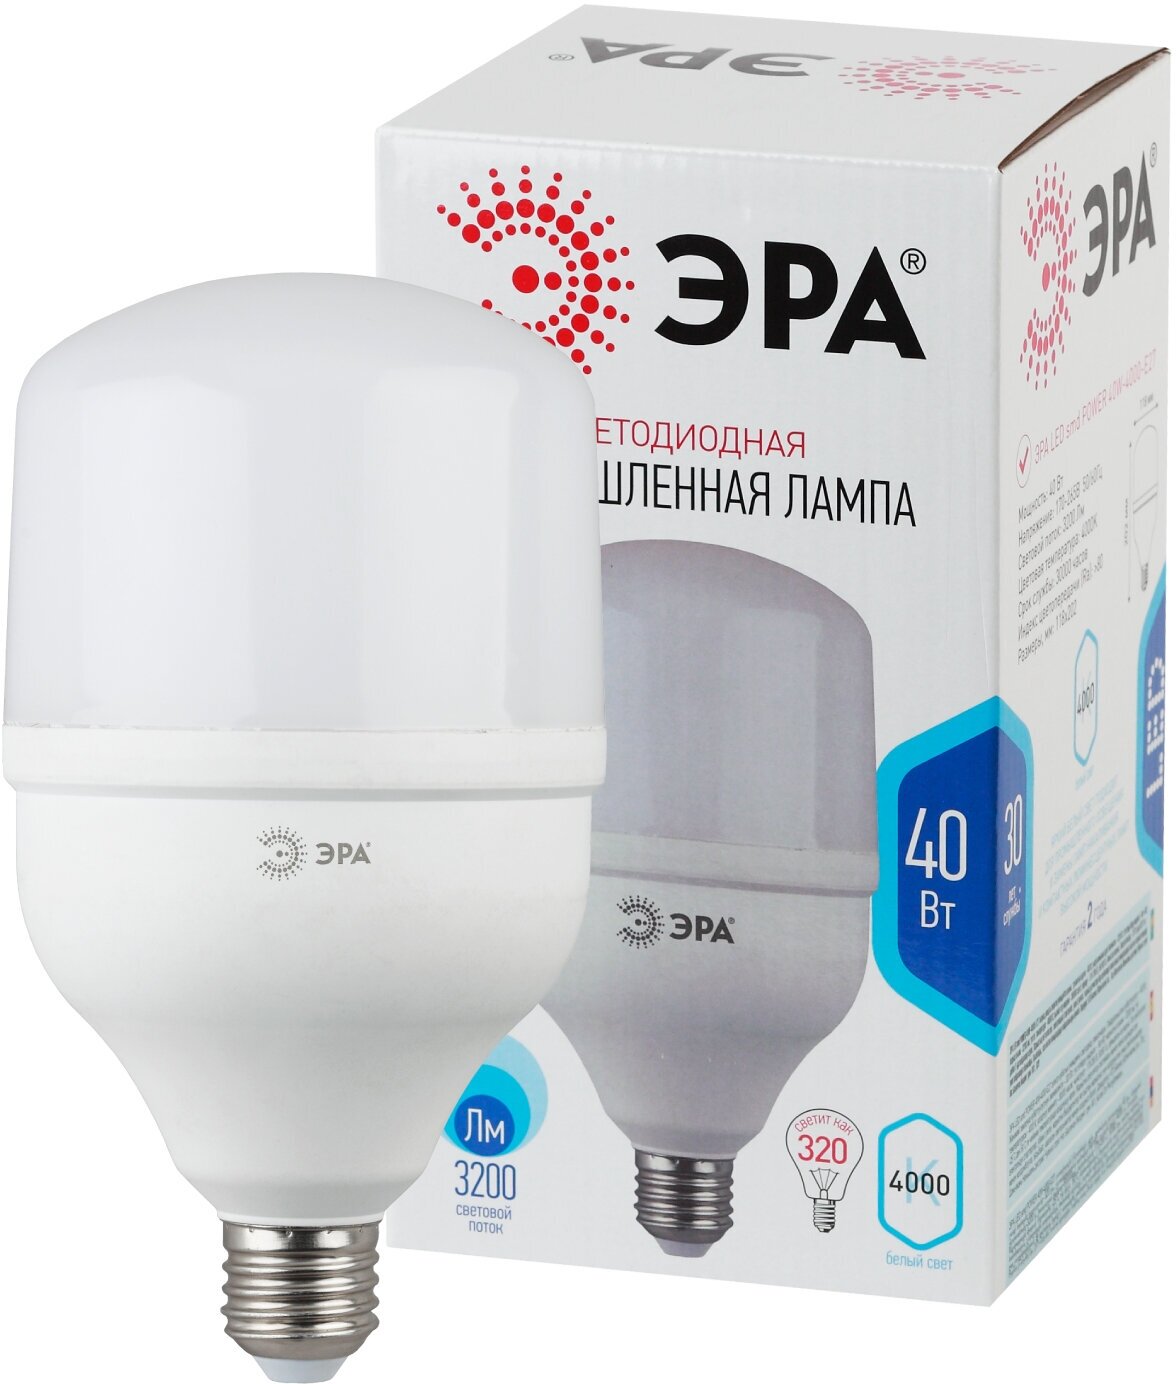 Лампа светодиодная ЭРА STD LED POWER T120-40W-4000-E27 Е27 40 Вт колокол нейтральный белый свет арт. Б0027005 (1 шт.)